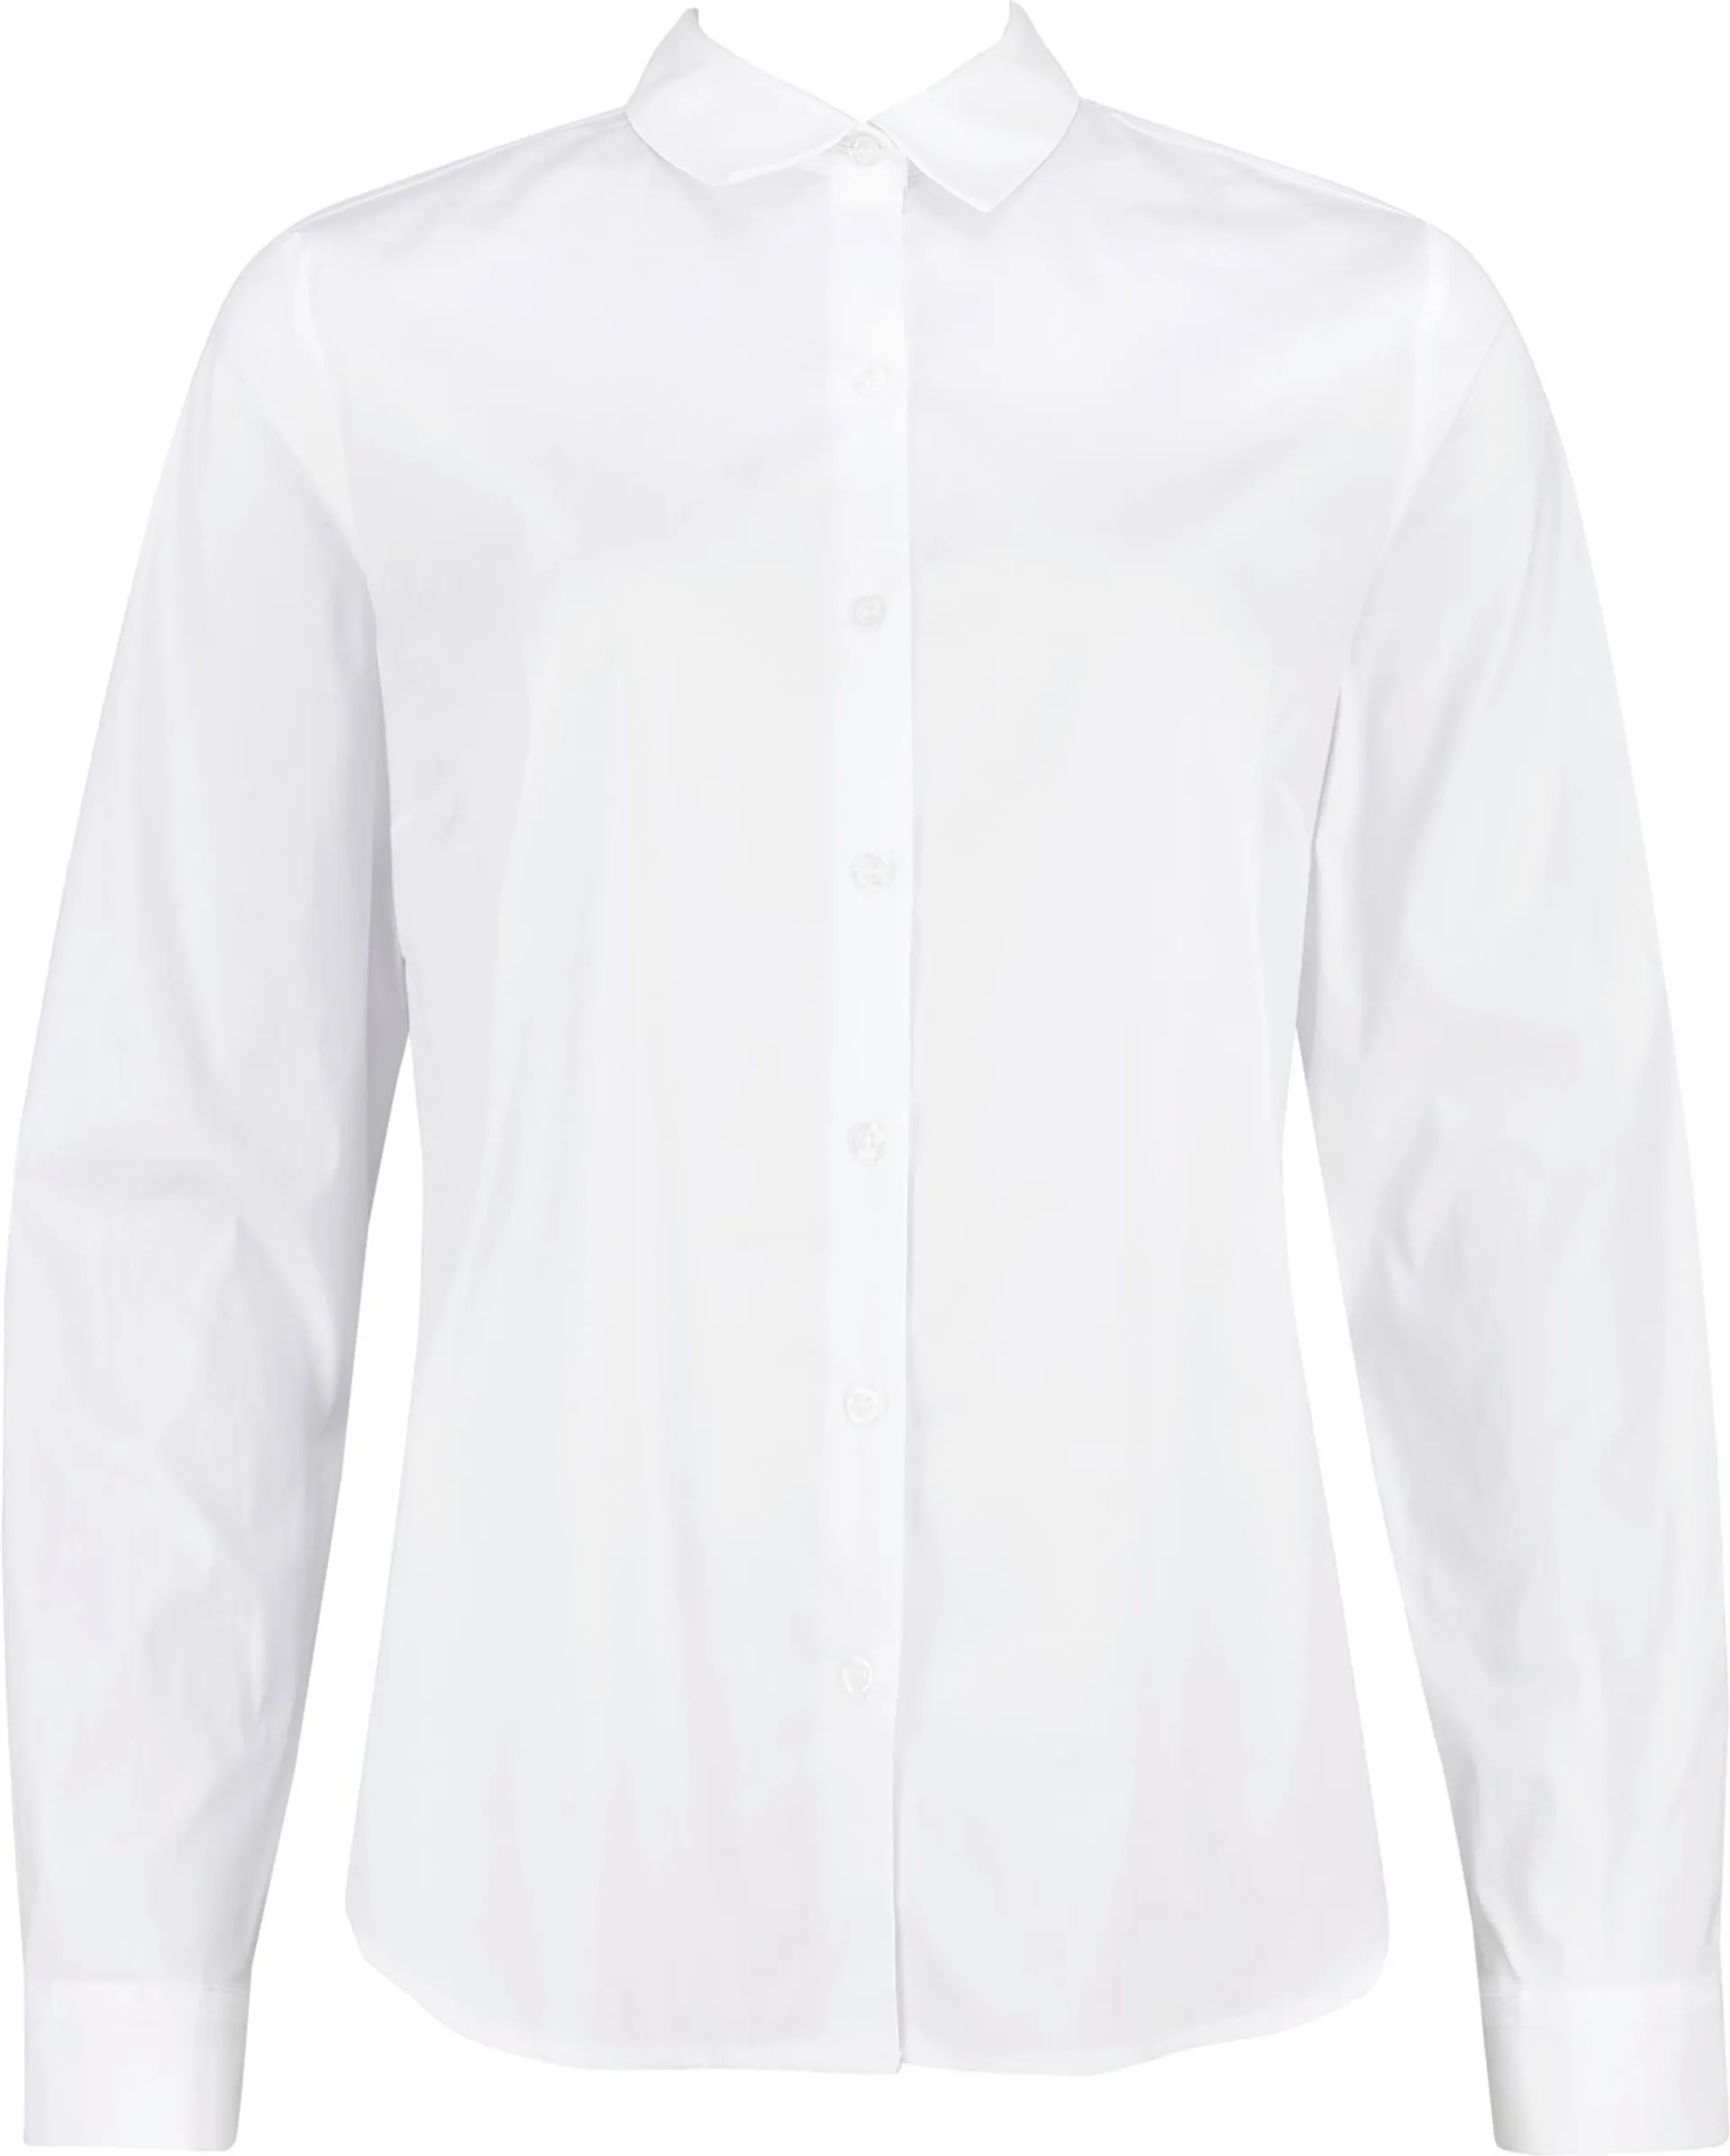 London Fog naisten paitapusero Cece - Bright white - 2